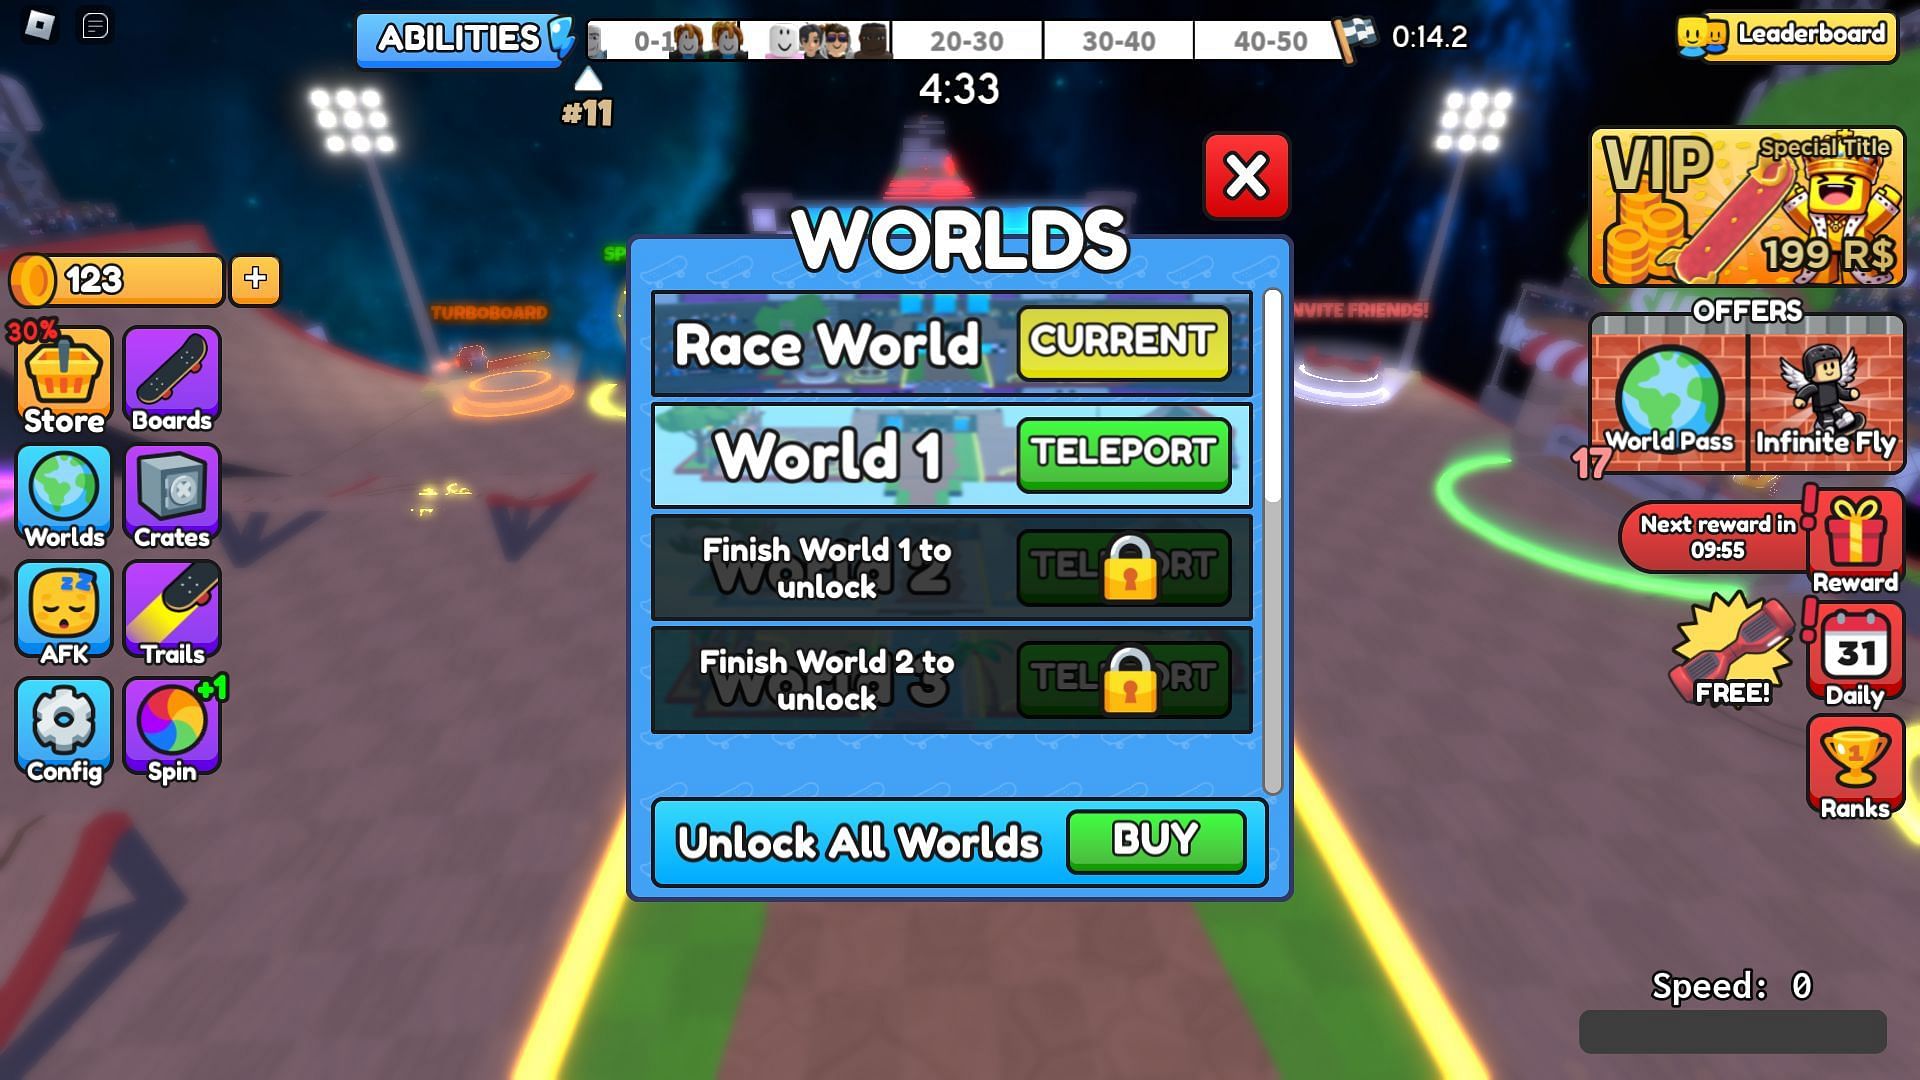 World selection screen (Image via Roblox)